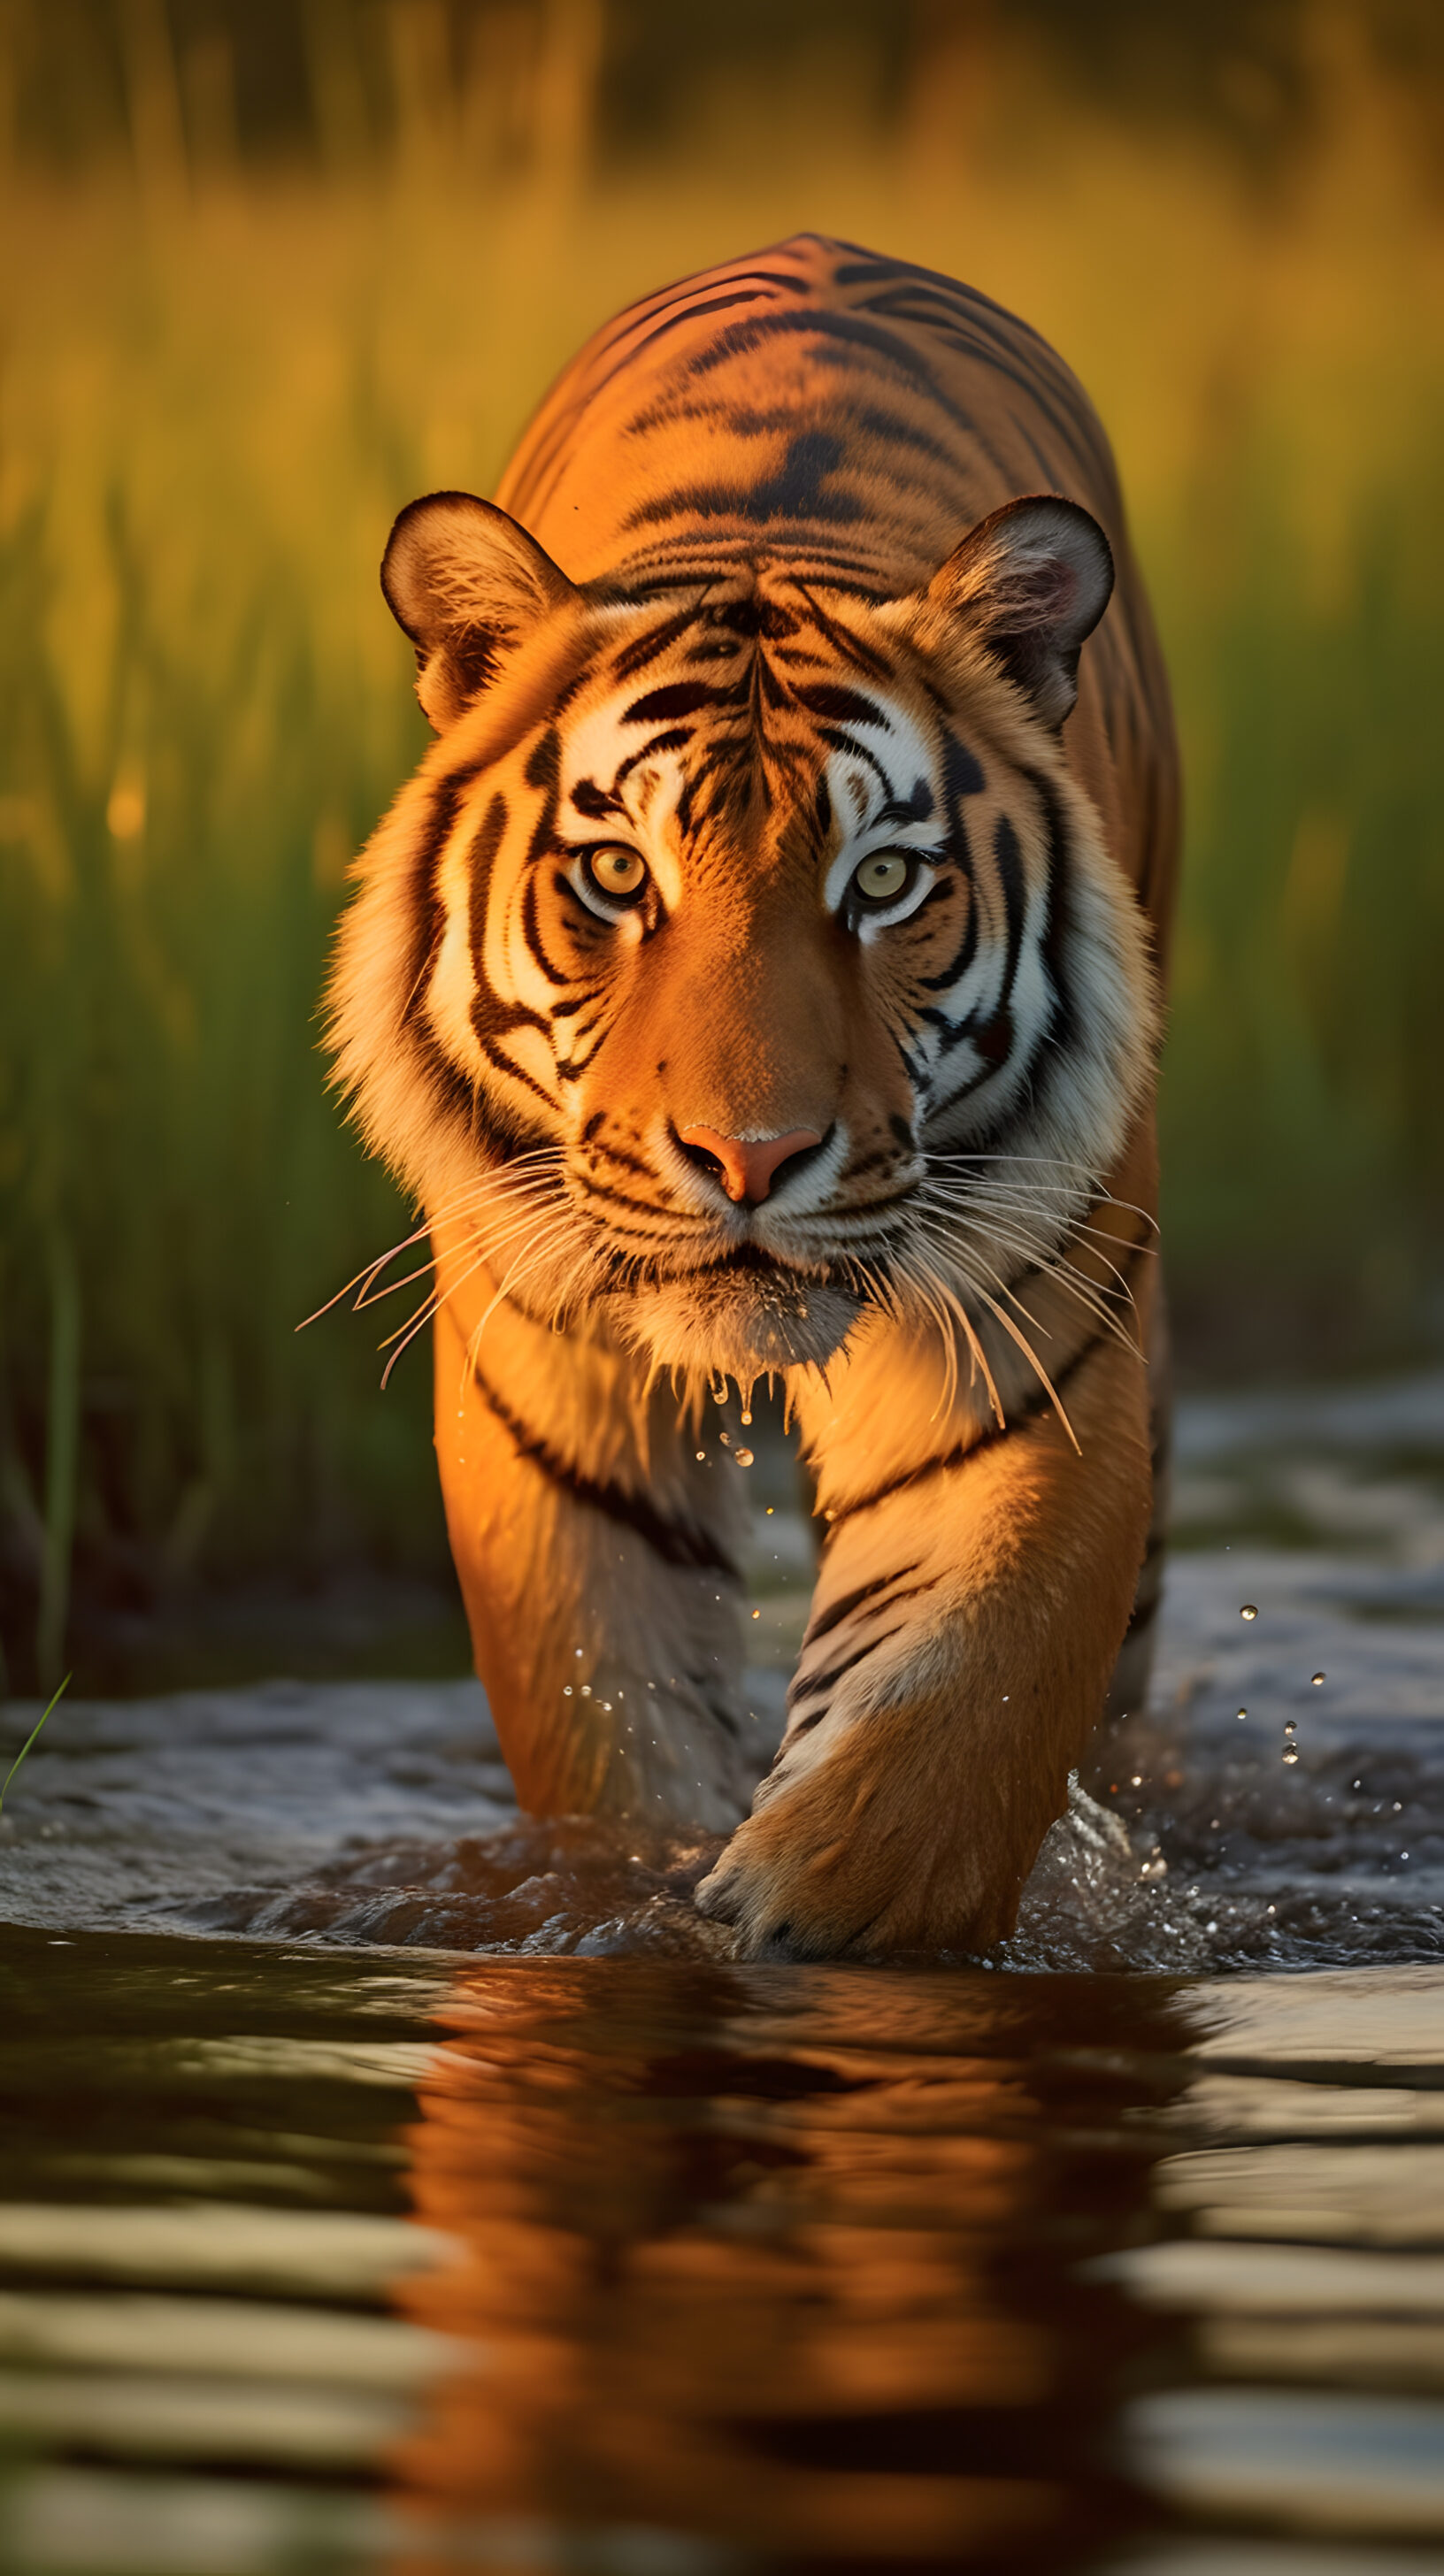 Papel Parede tigre